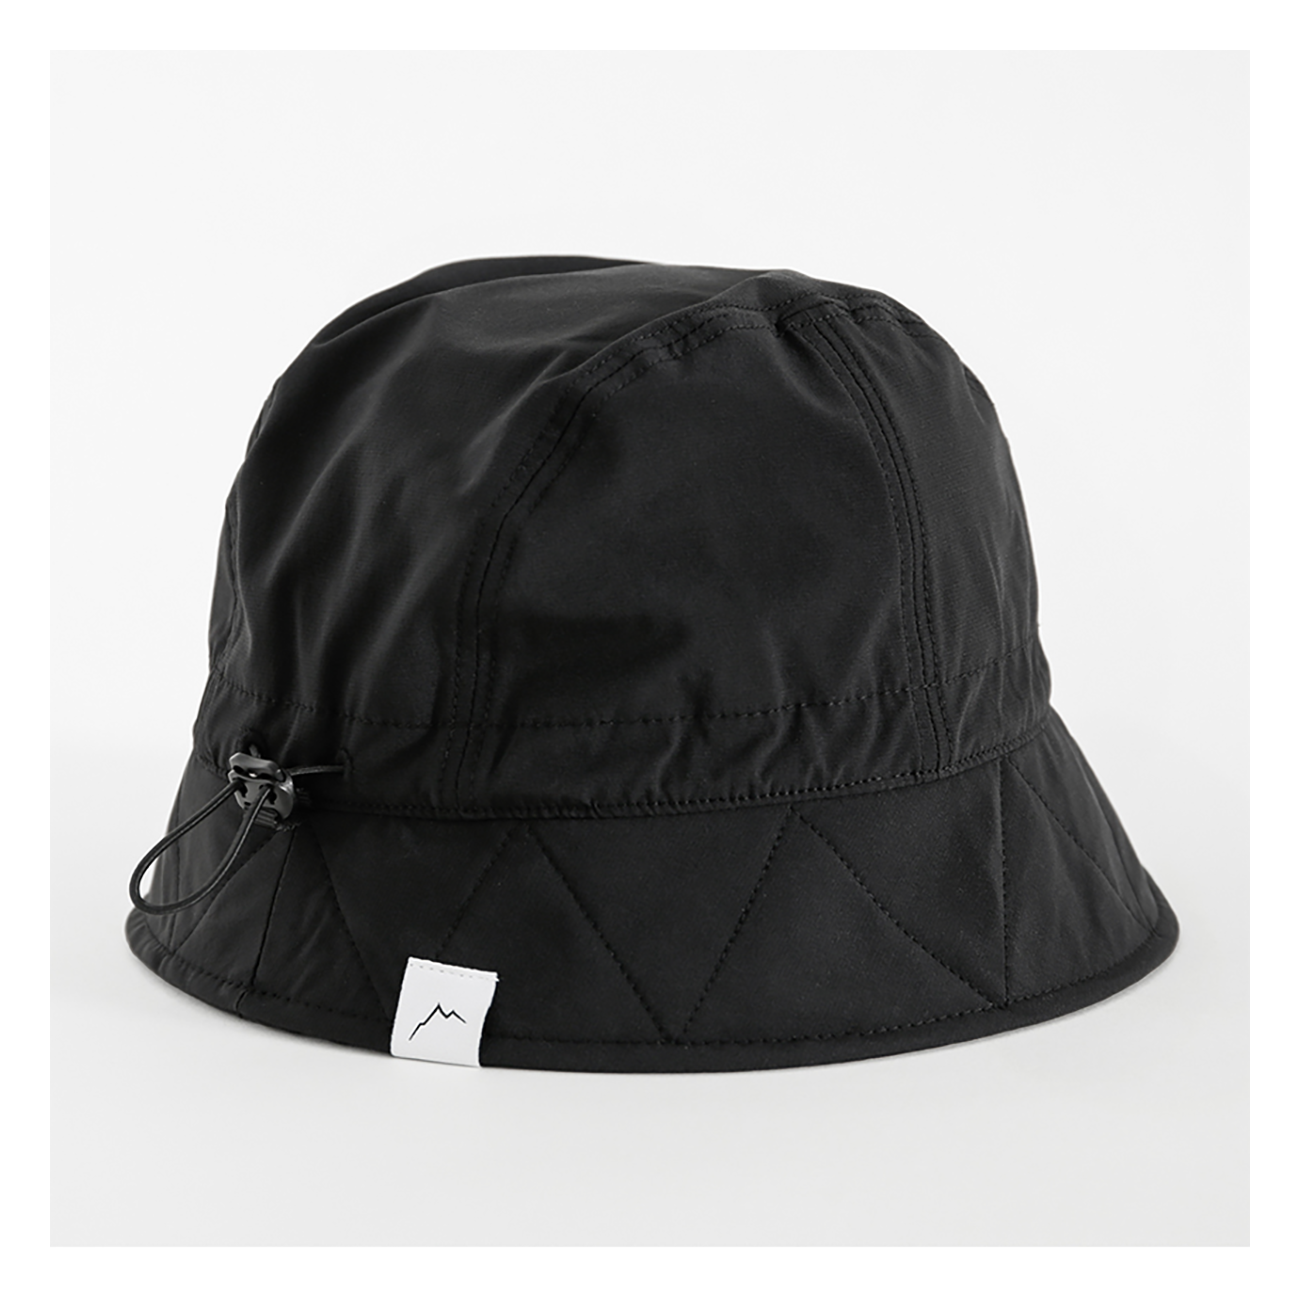 CAYL AquaX Hat- Black